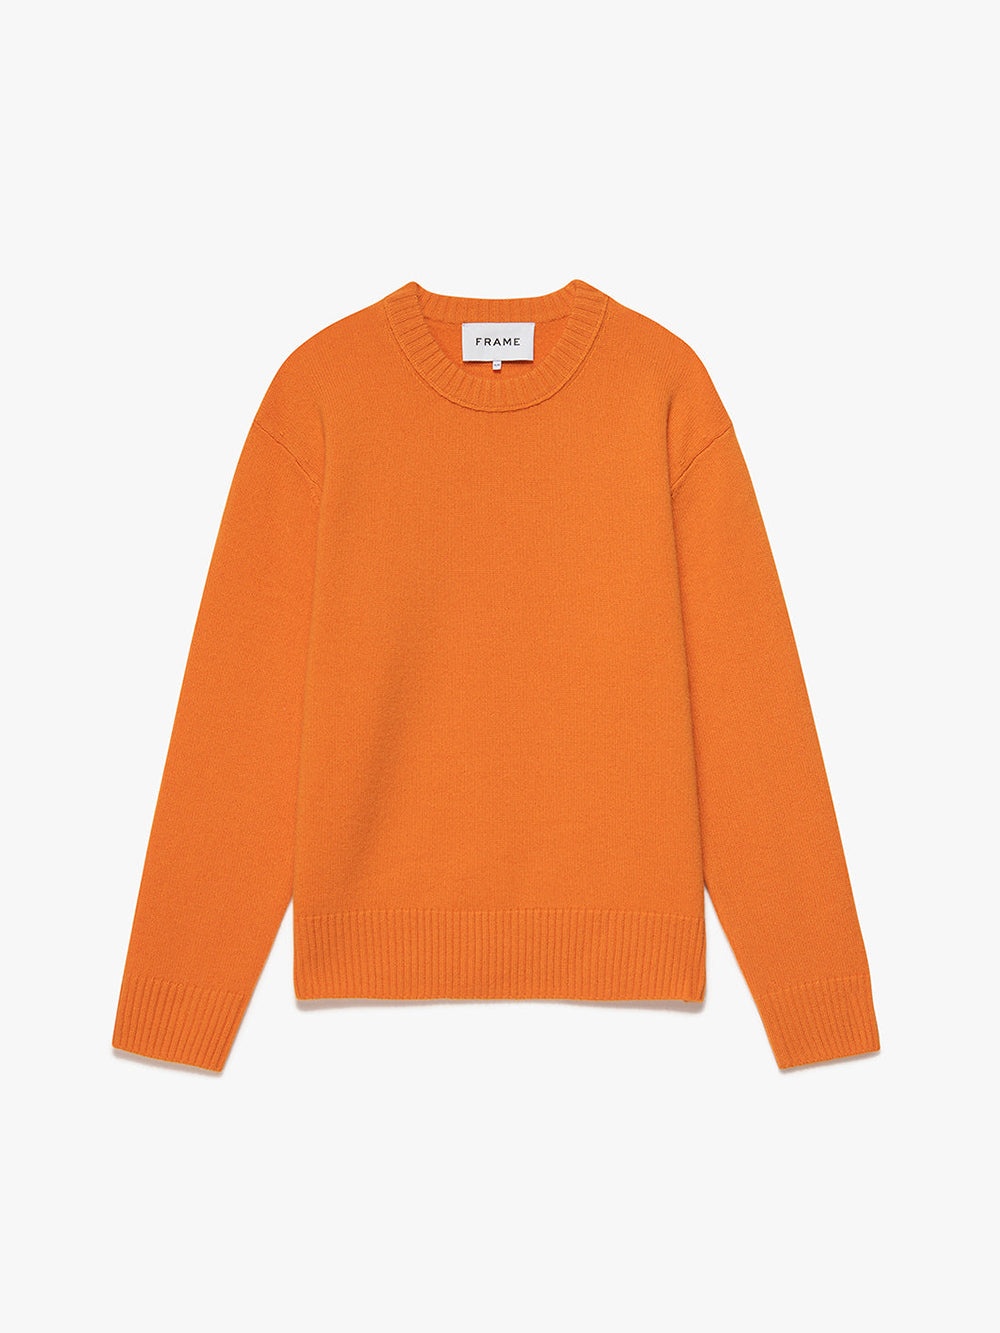 Lightweight Cashmere Sweater in Clementine - 1